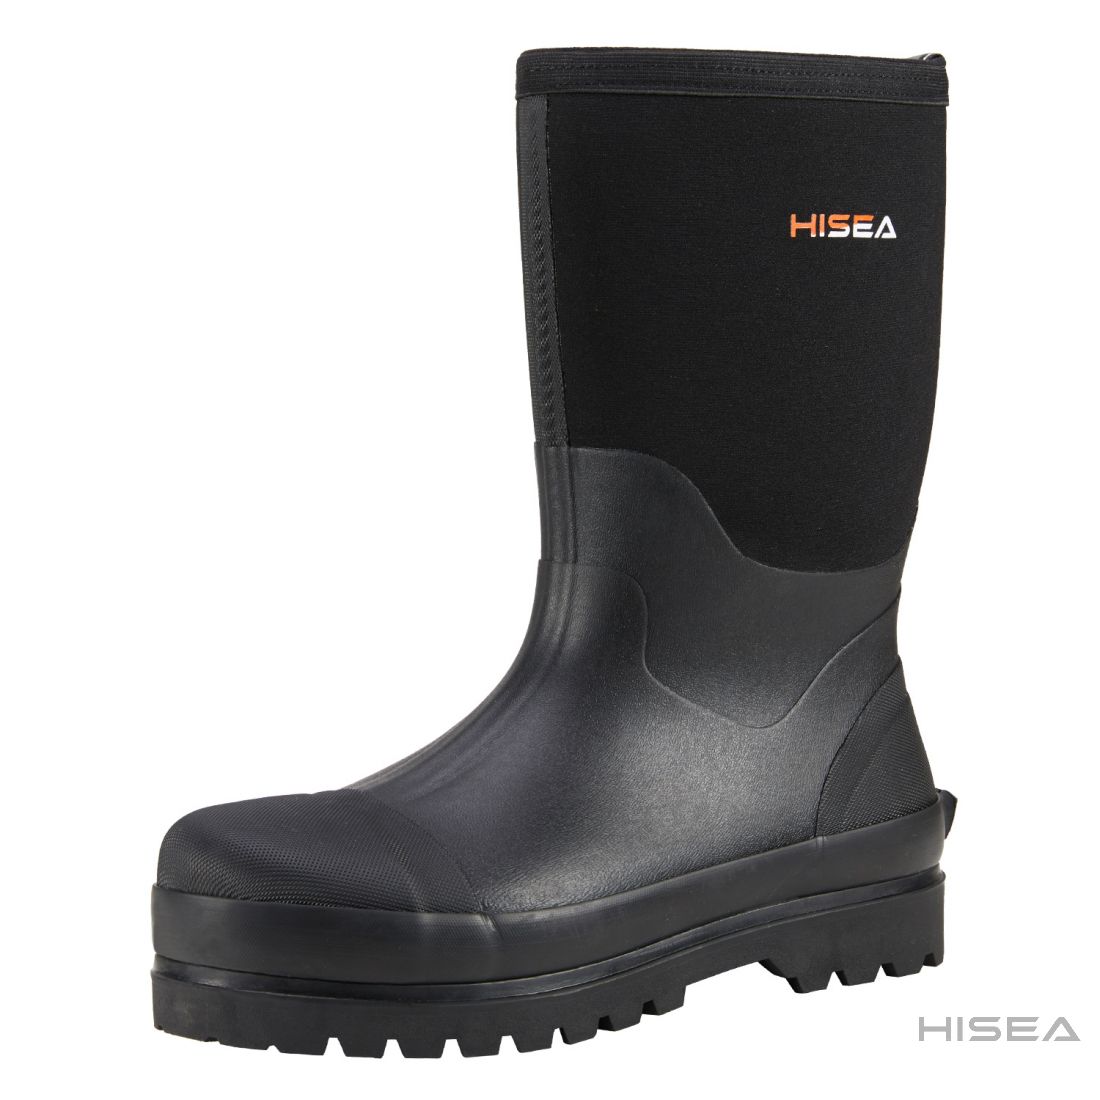 Men's Mid-Calf Work Boots | HISEA